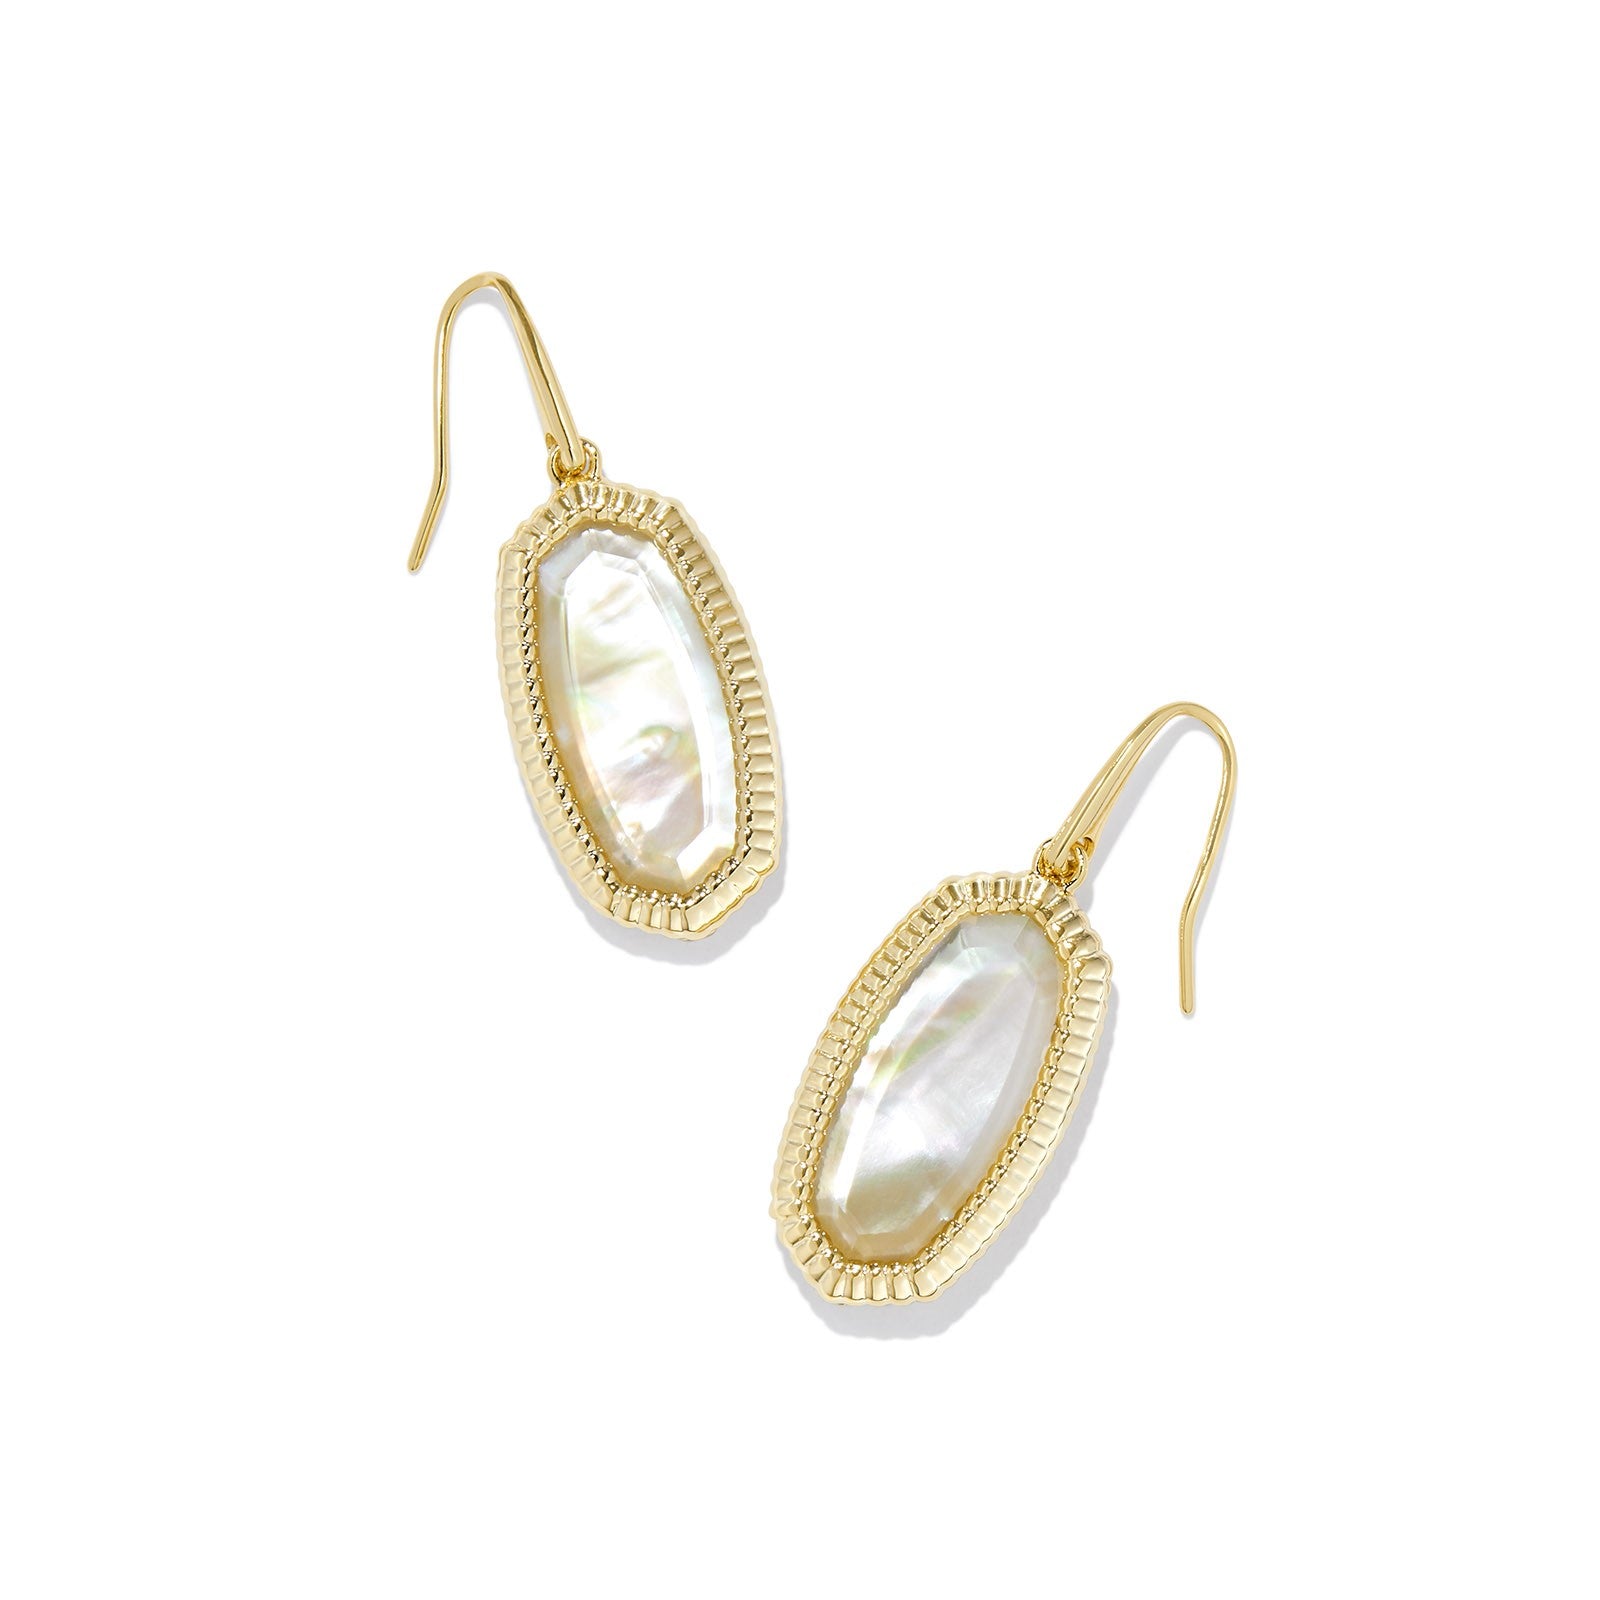 Kendra Scott | Dani Gold Ridge Frame Drop Earrings in Golden Abalone - Giddy Up Glamour Boutique